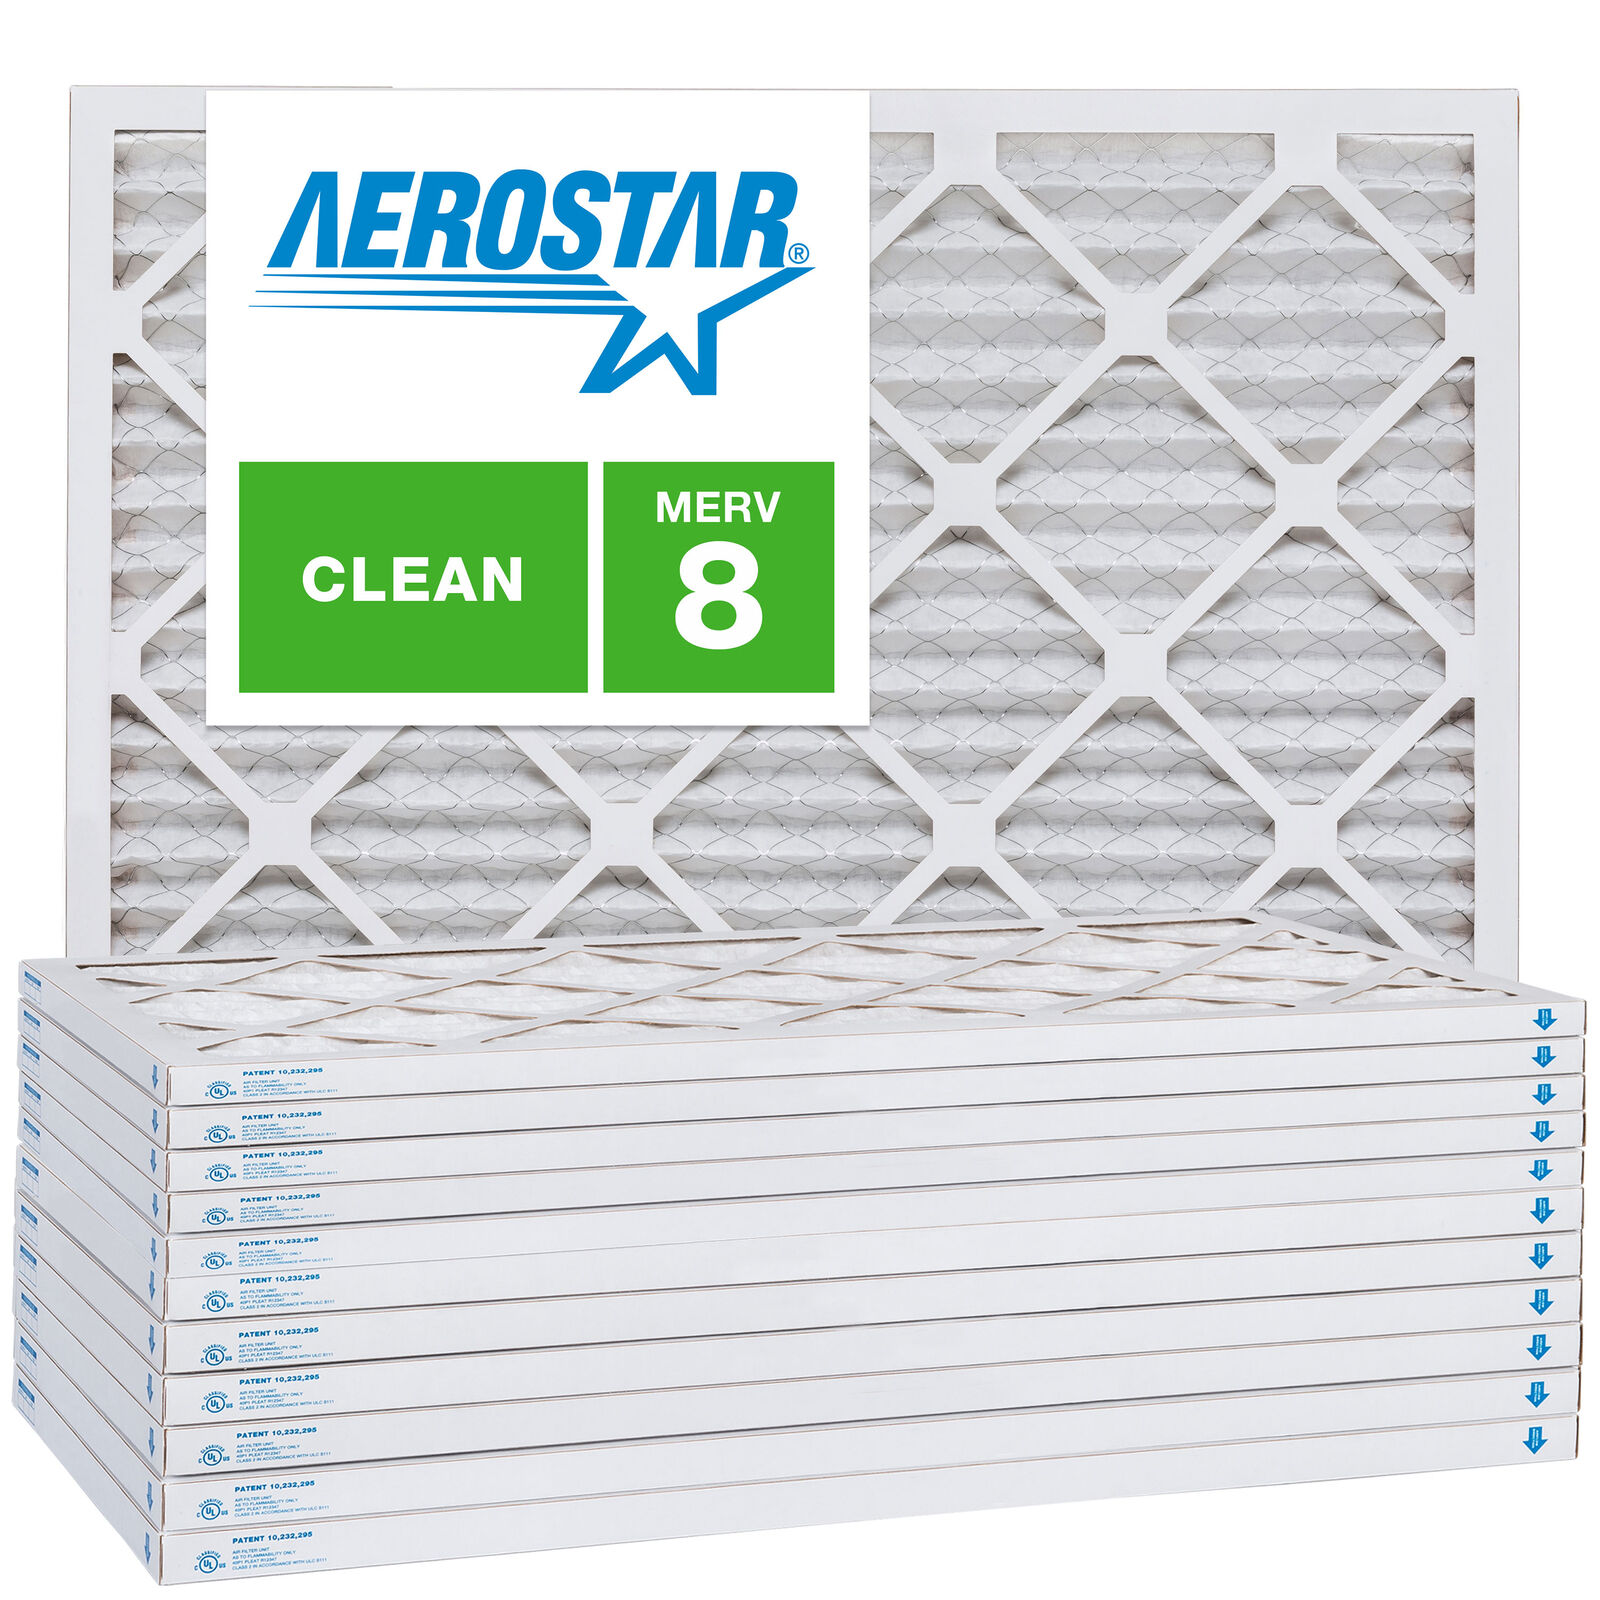 20x22x1 AC and Furnace Air Filter by Aerostar - MERV 8, Box of 12